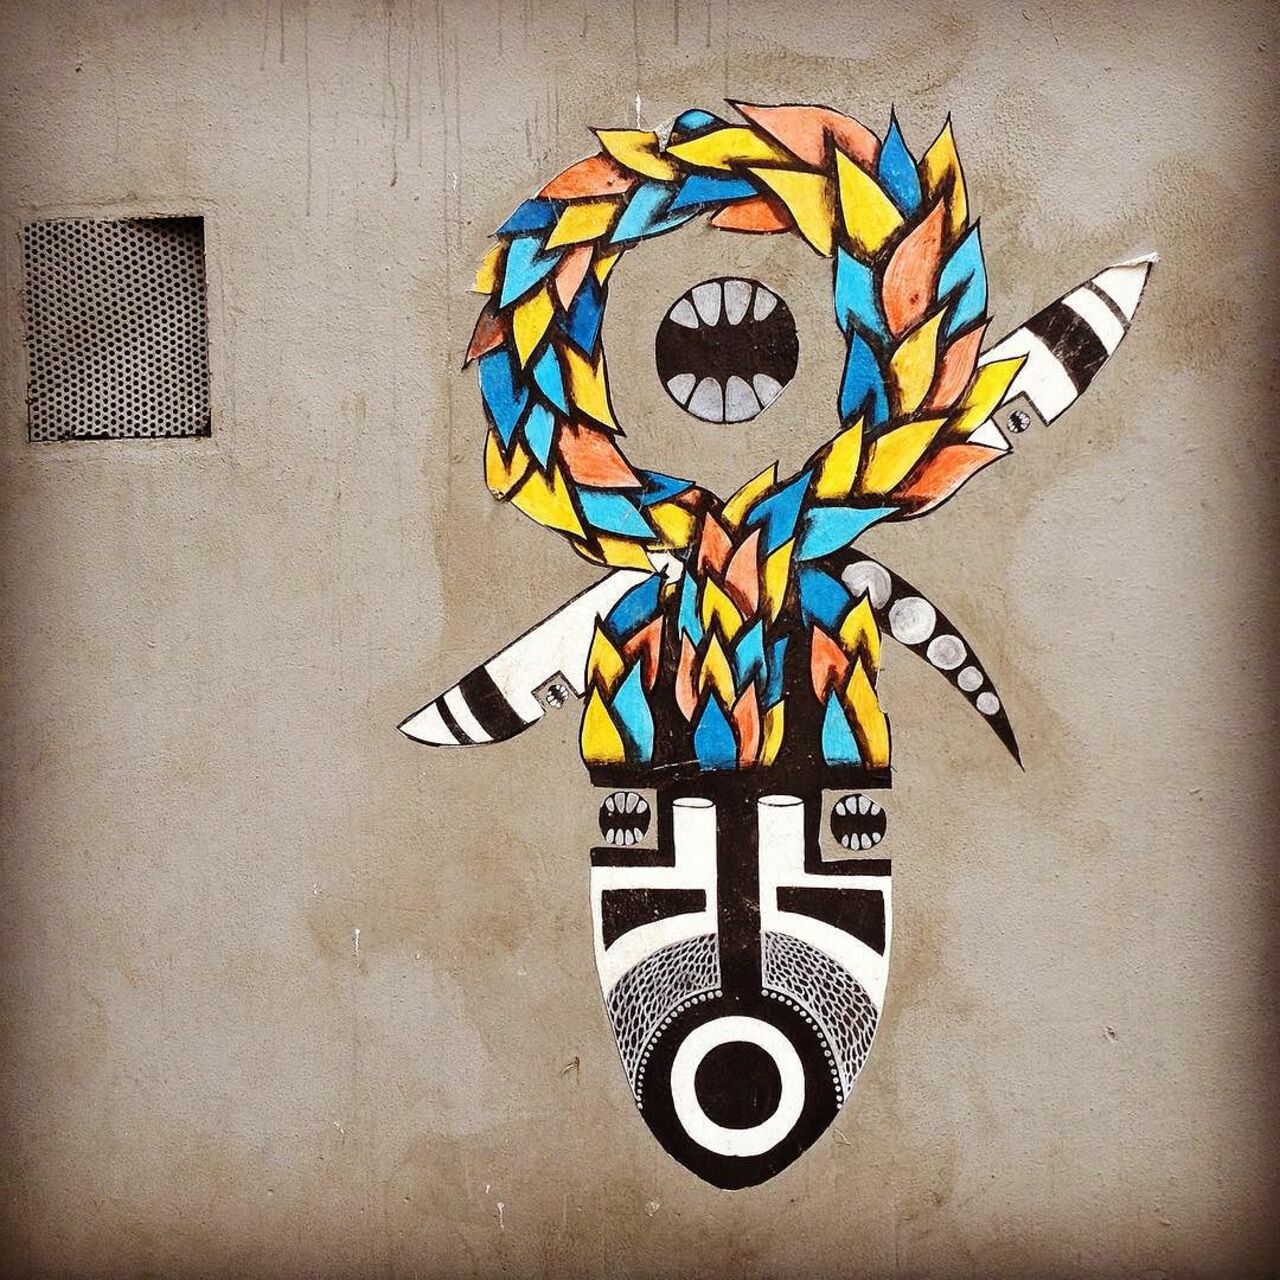 #Paris #graffiti photo by @theunitedfingers http://ift.tt/1MlFcOl #StreetArt https://t.co/bAPLwf0GEA